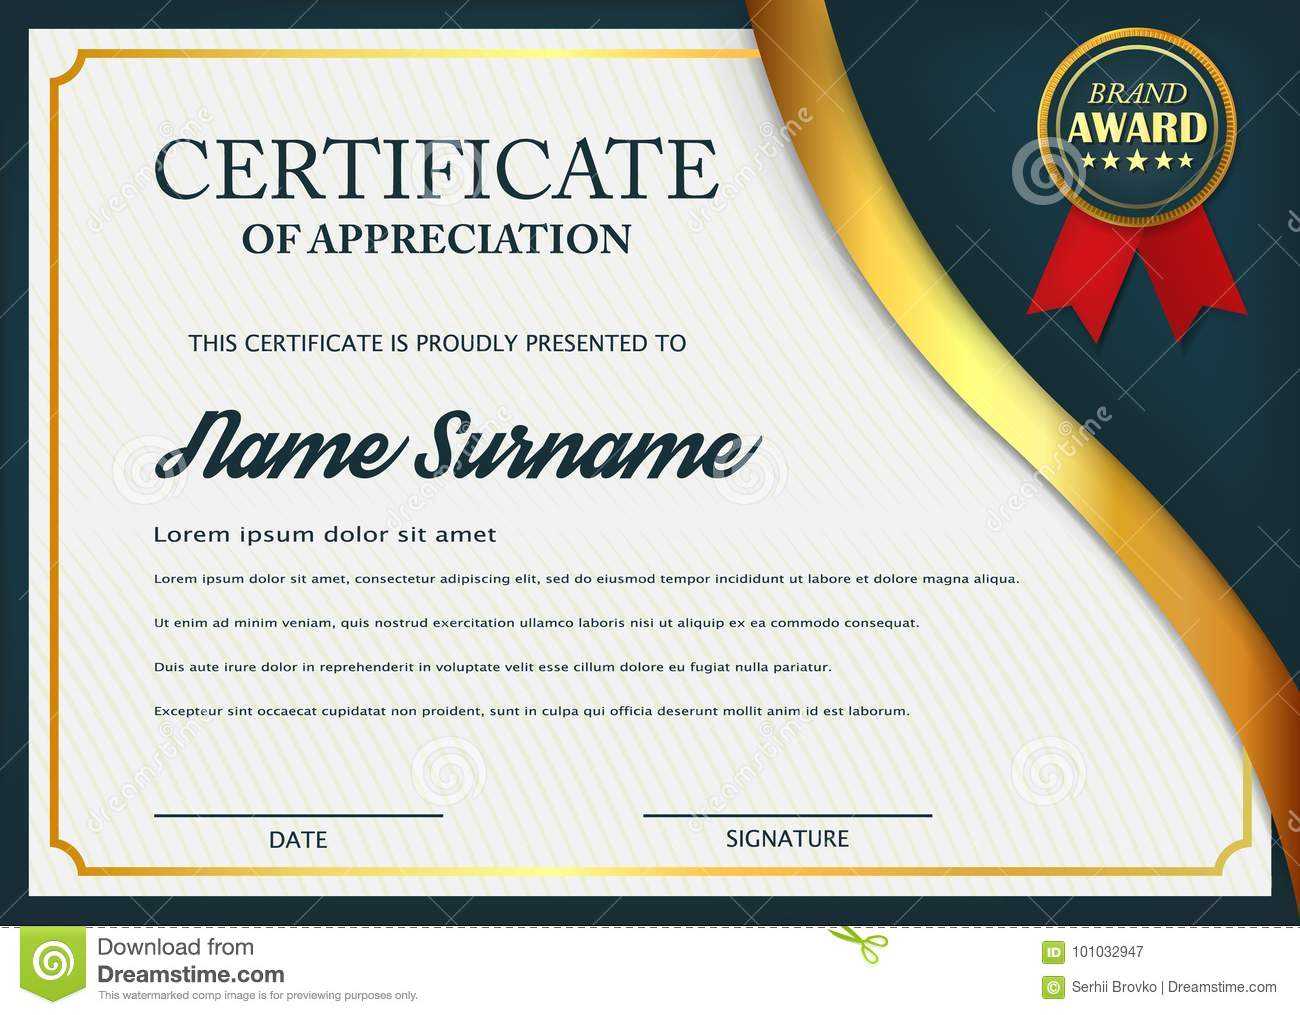 Creative Certificate Of Appreciation Award Template With Regard To Template For Certificate Of Award